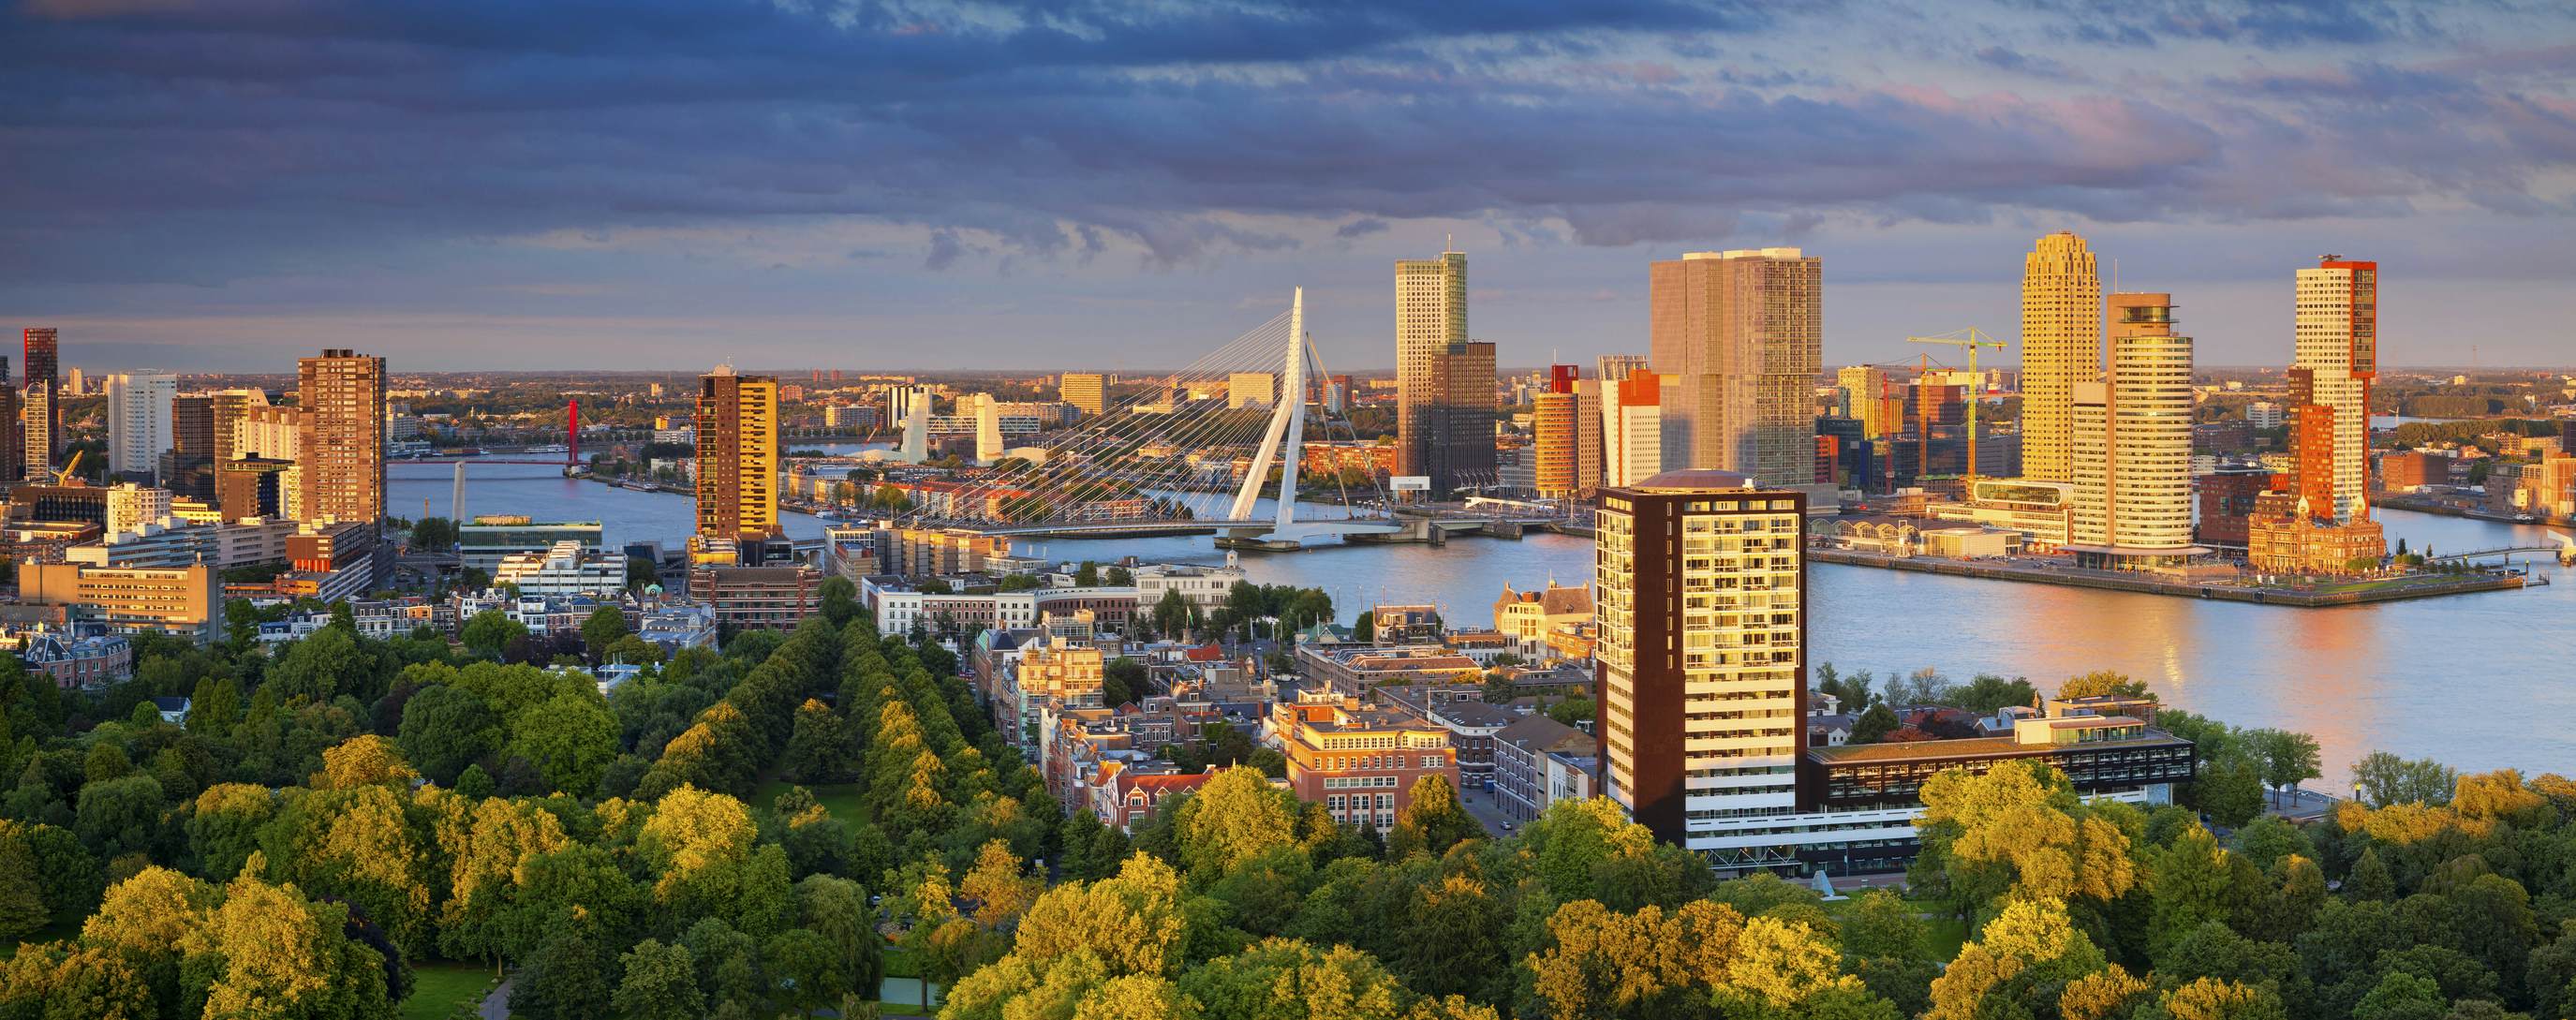 Rotterdam image